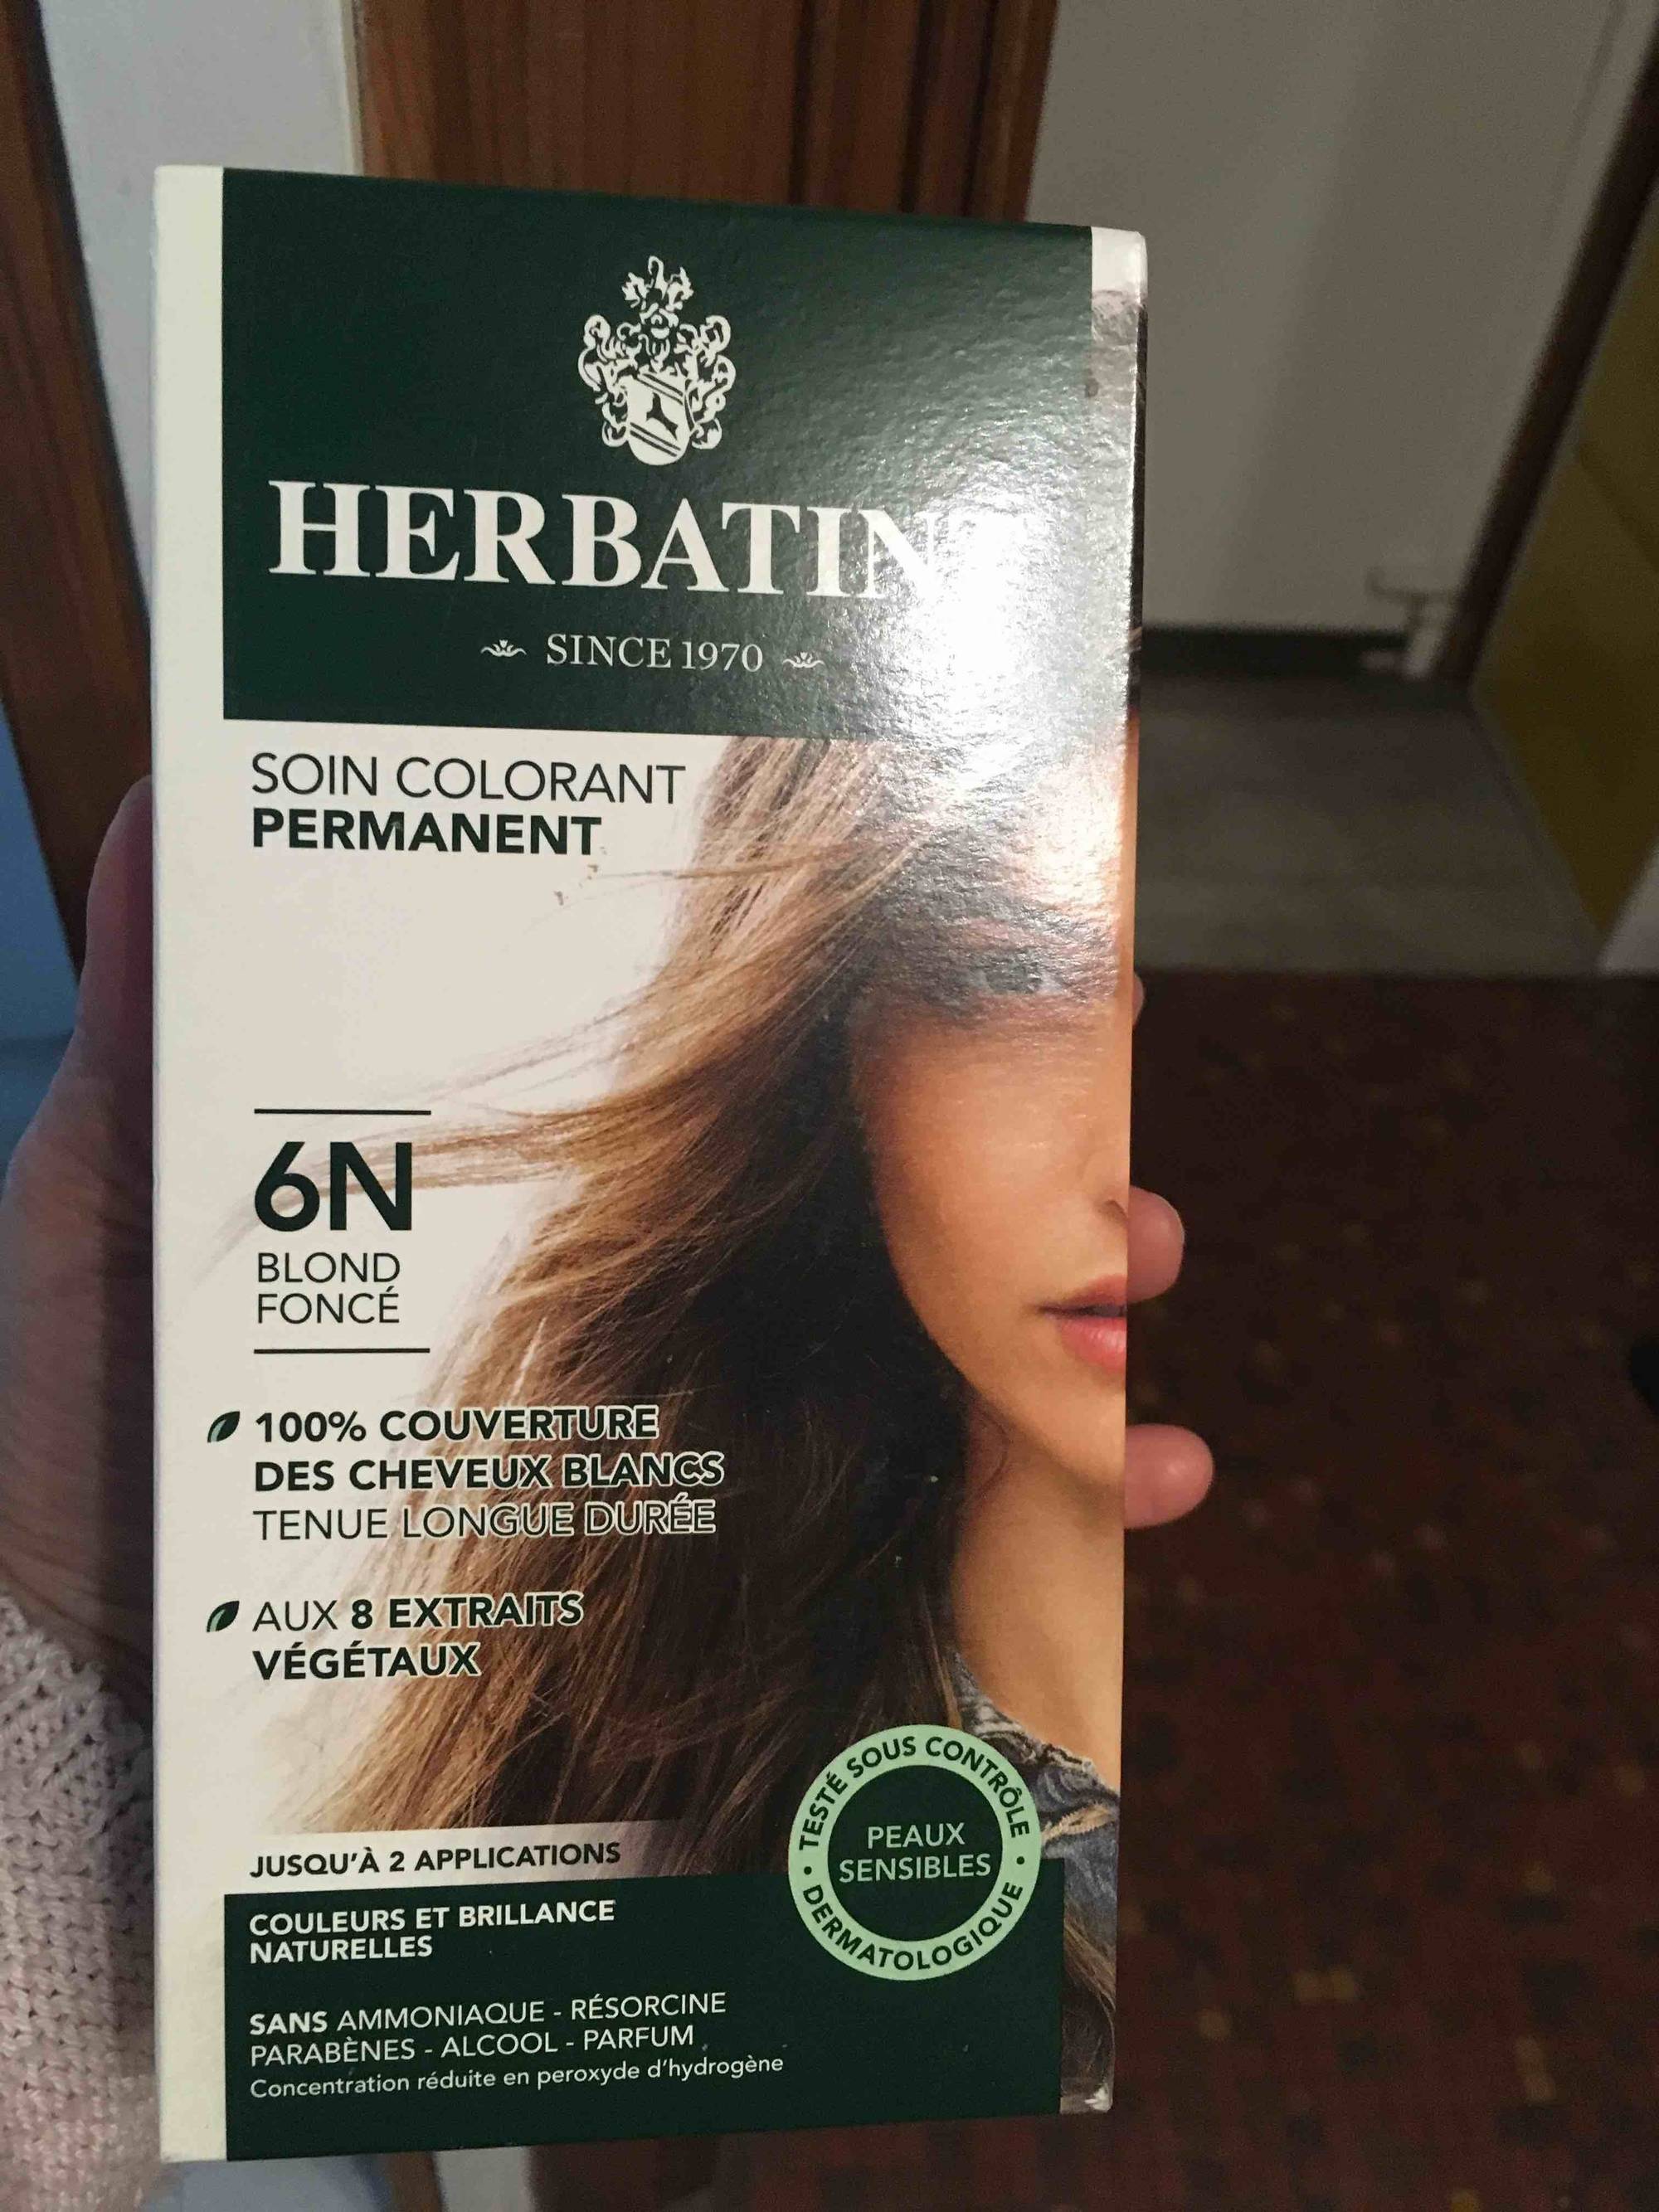 HERBATINT - Soin colorant permanent 6N Blond foncé